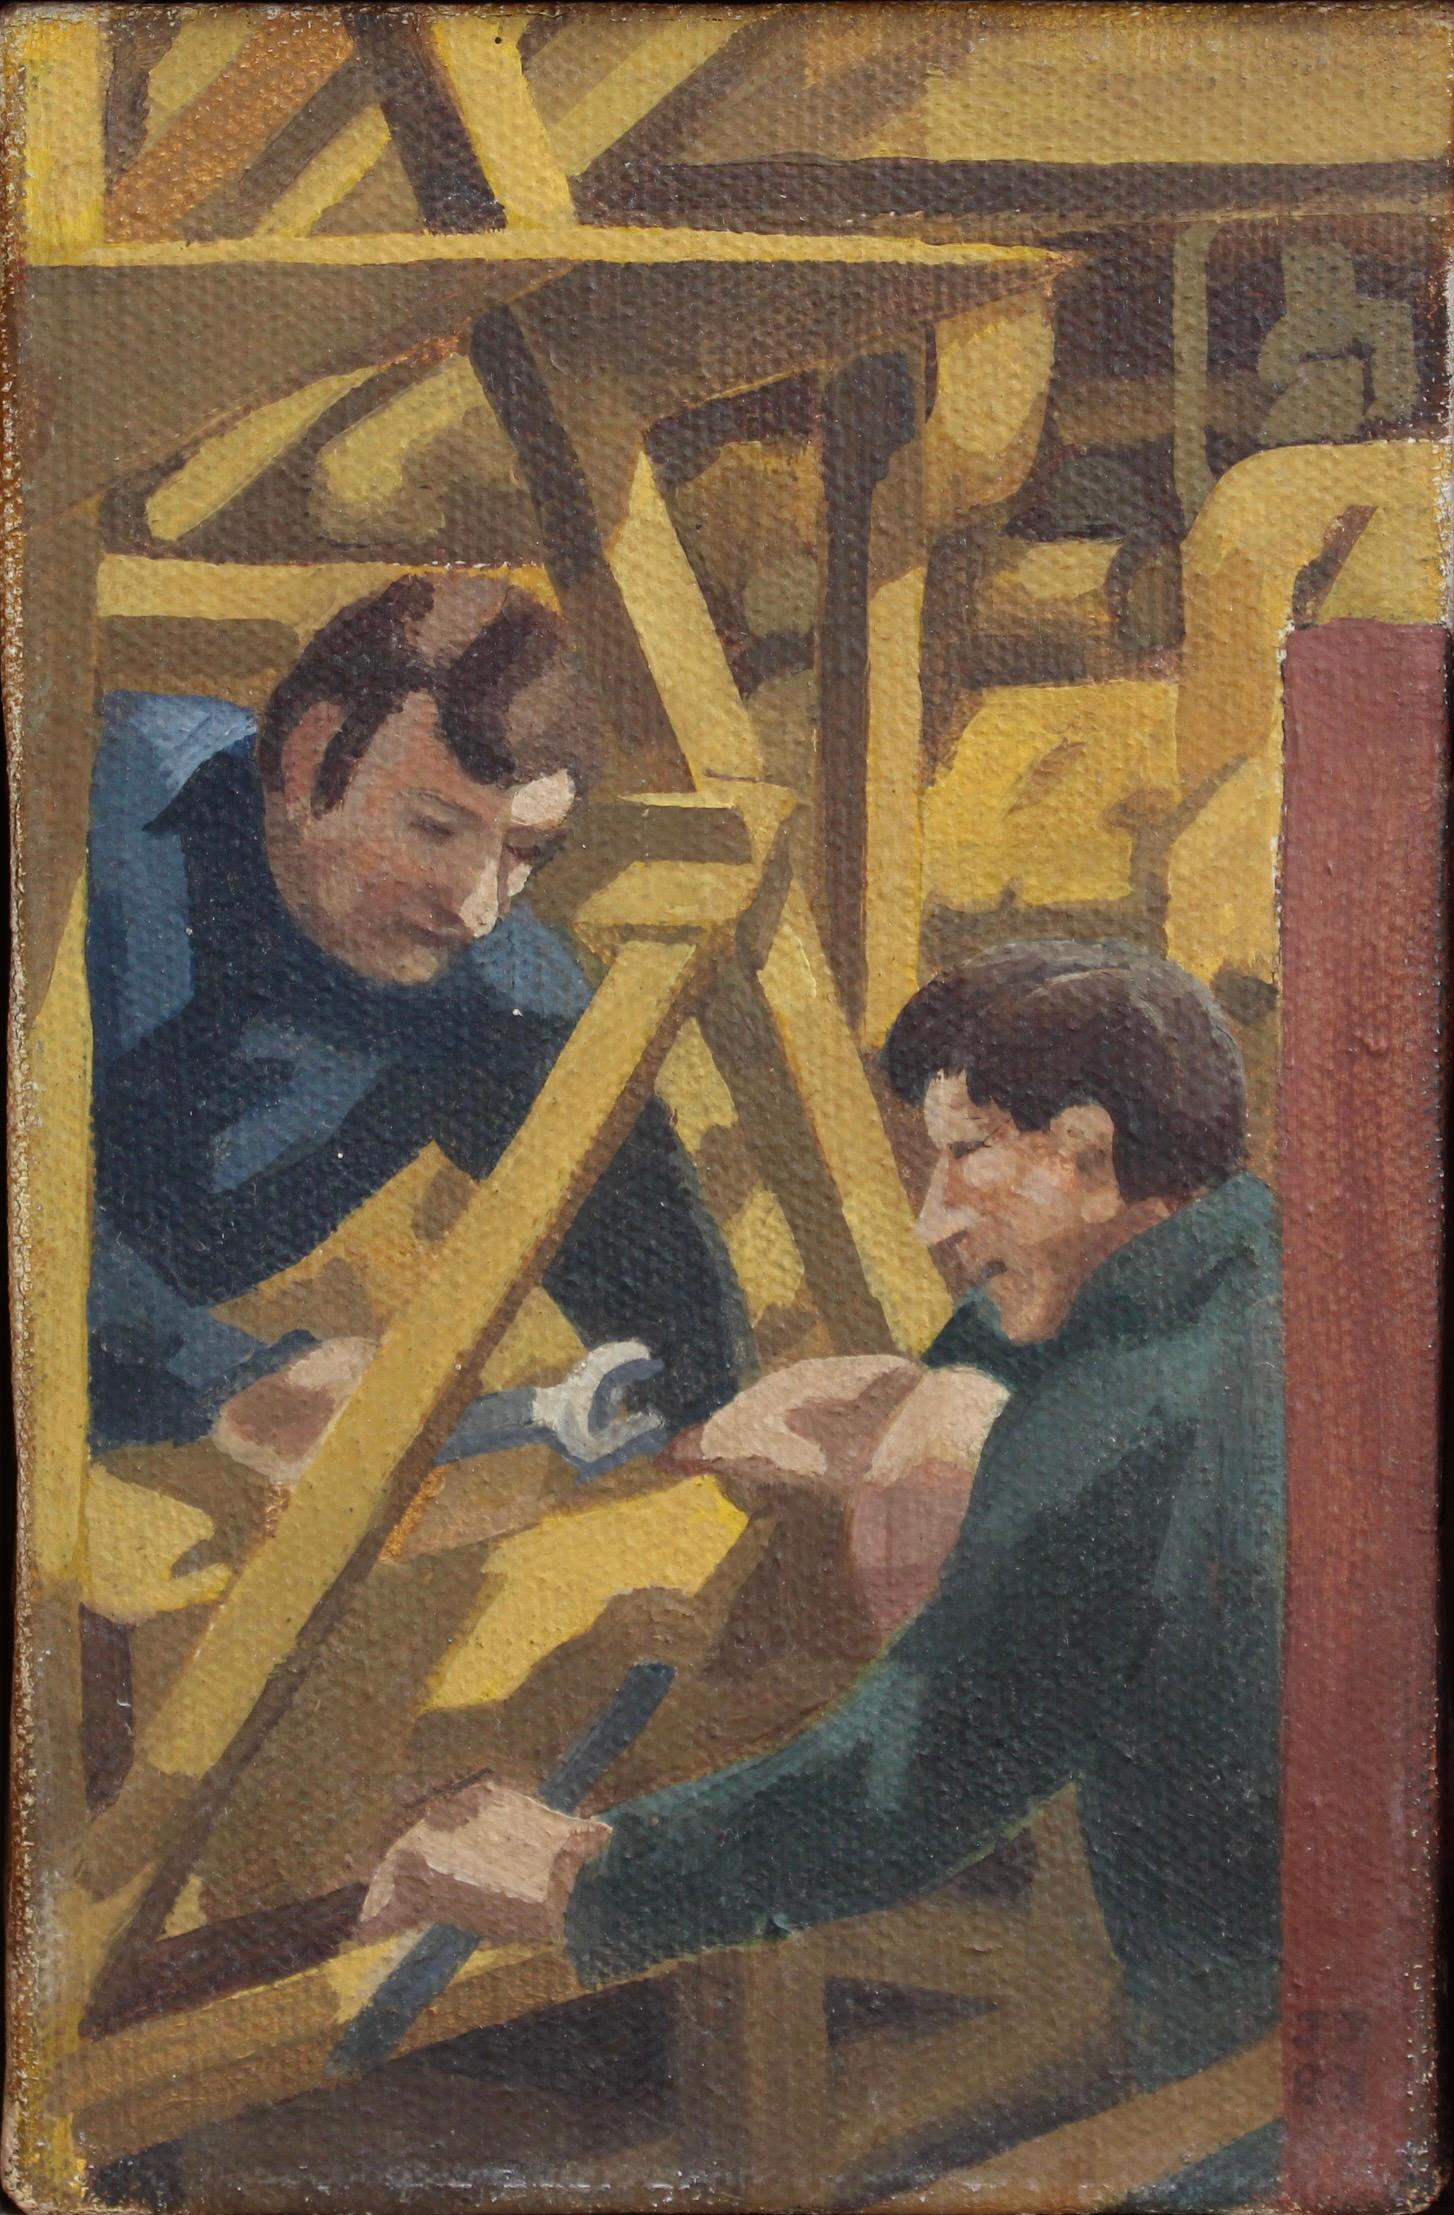 John James Portrait Painting - Men Working on a Concrete Crushing Machine